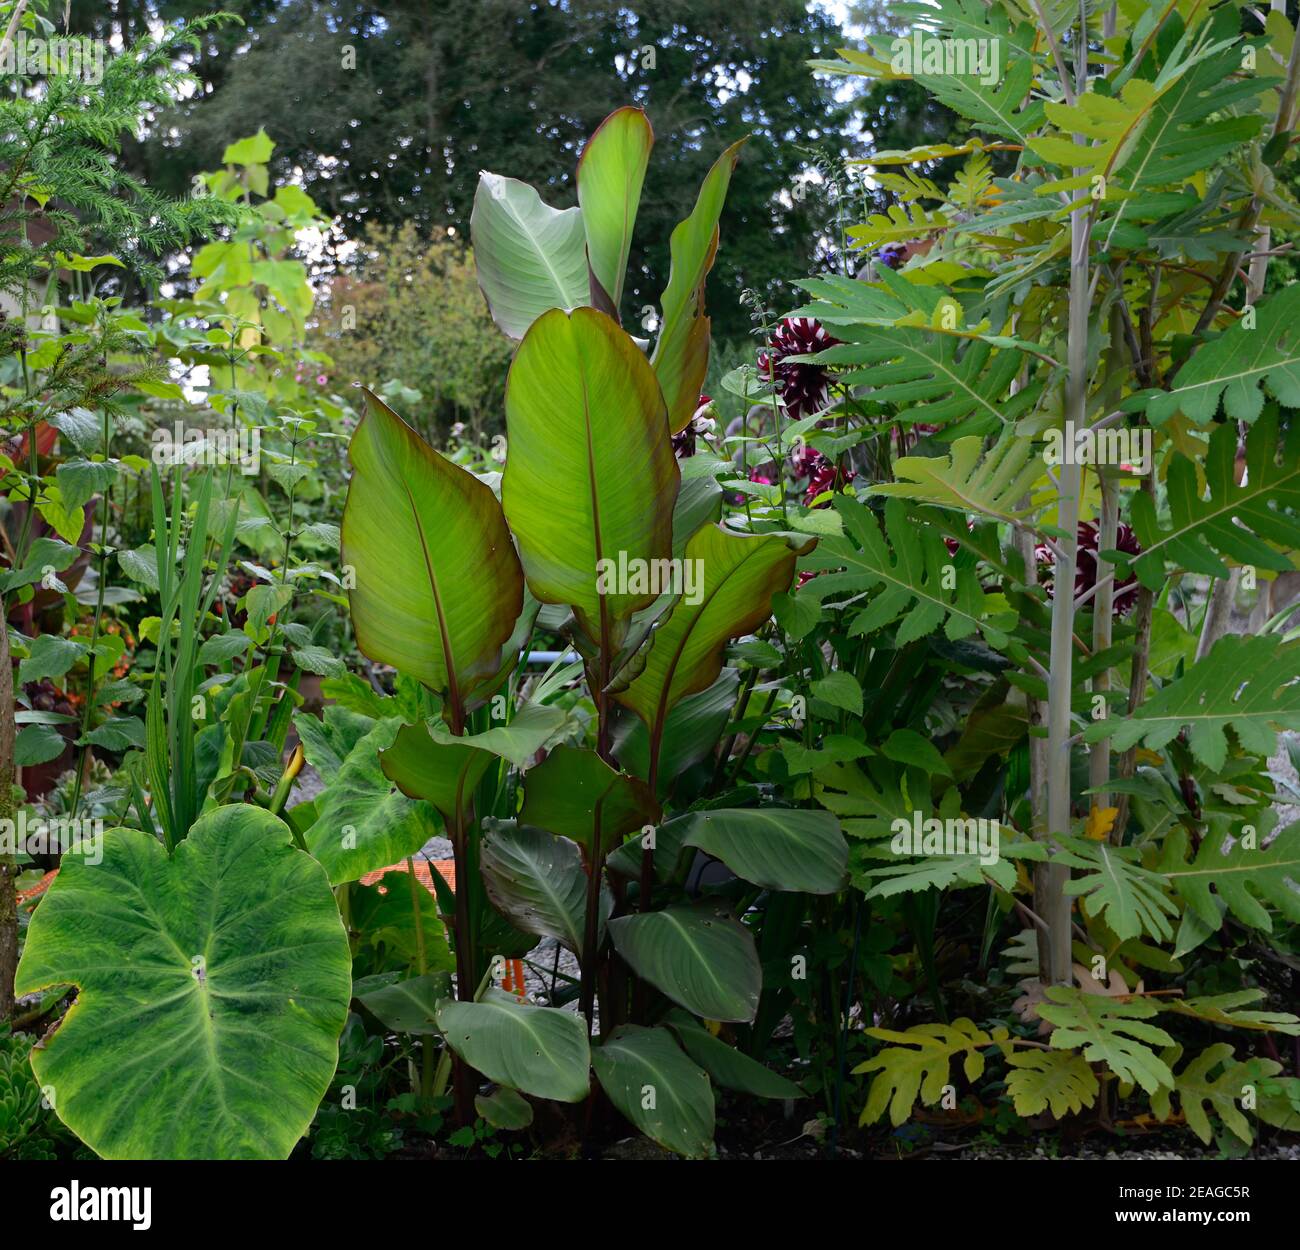 bocconia frutescens,ensete,colocasia,leaves,foliage,tropical planting,mixed tropical plants,tropical garden,foliage garden,RM Floral Stock Photo